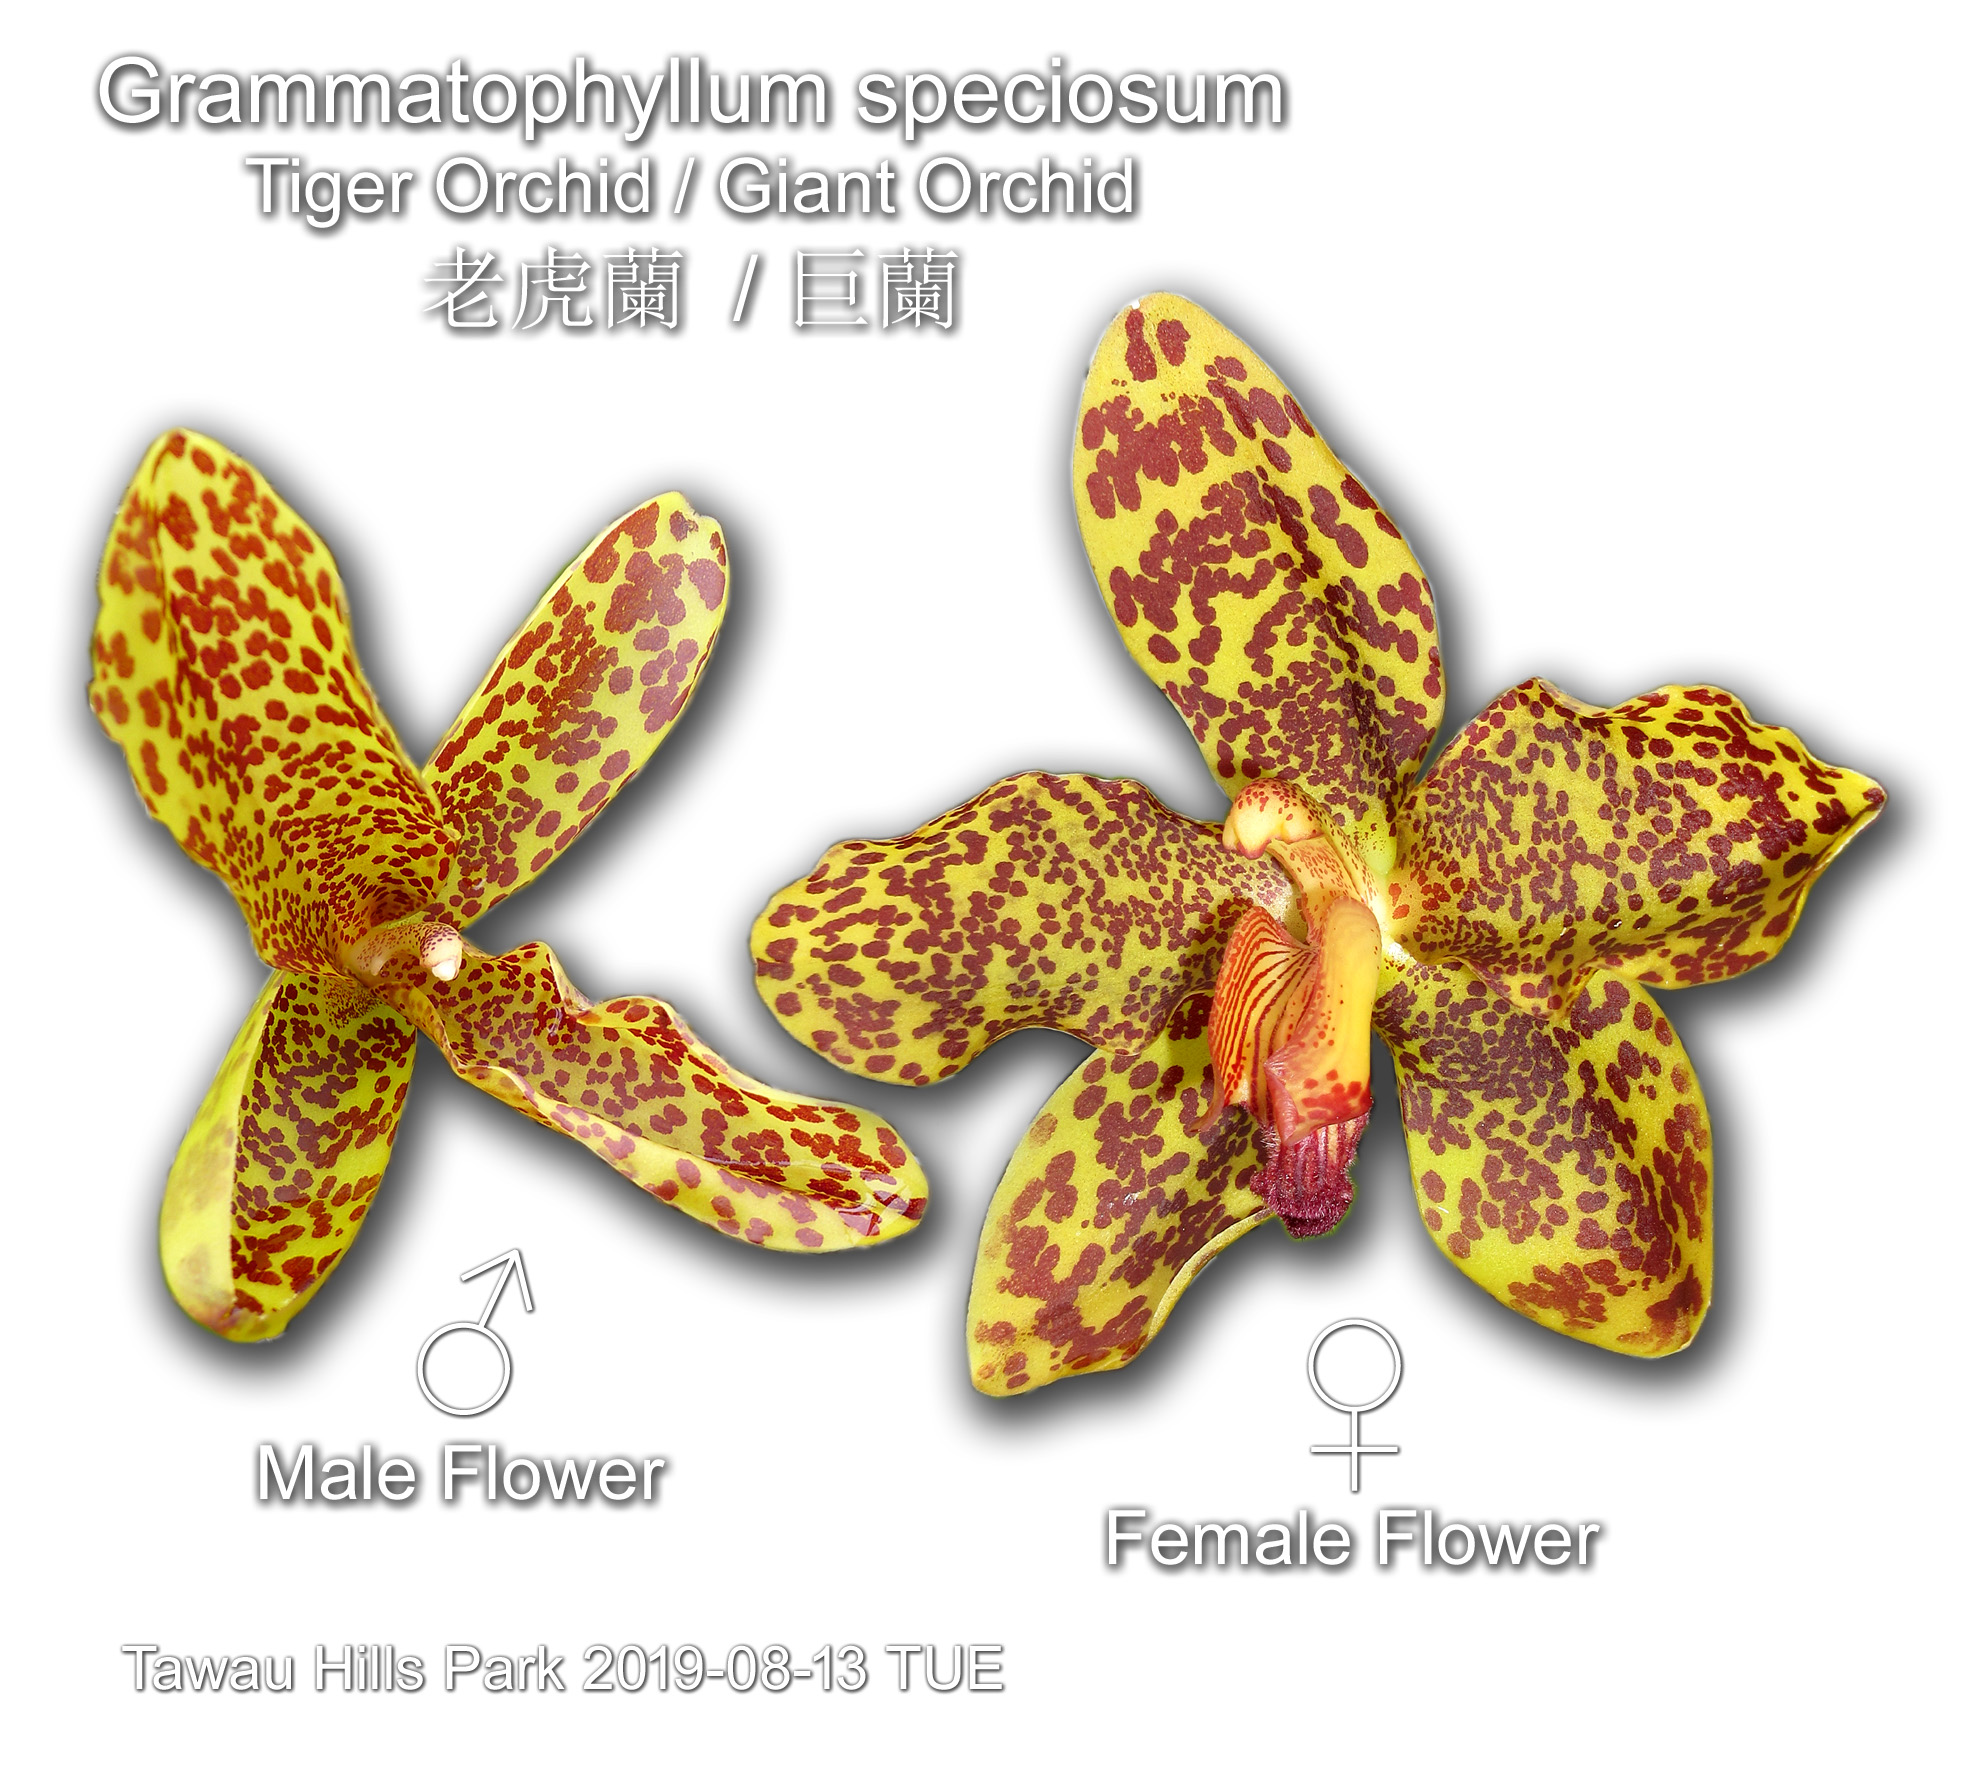 Grammatophyllum speciosum (Tiger Orchid/ Giant Orchid) 老虎蘭/巨蘭